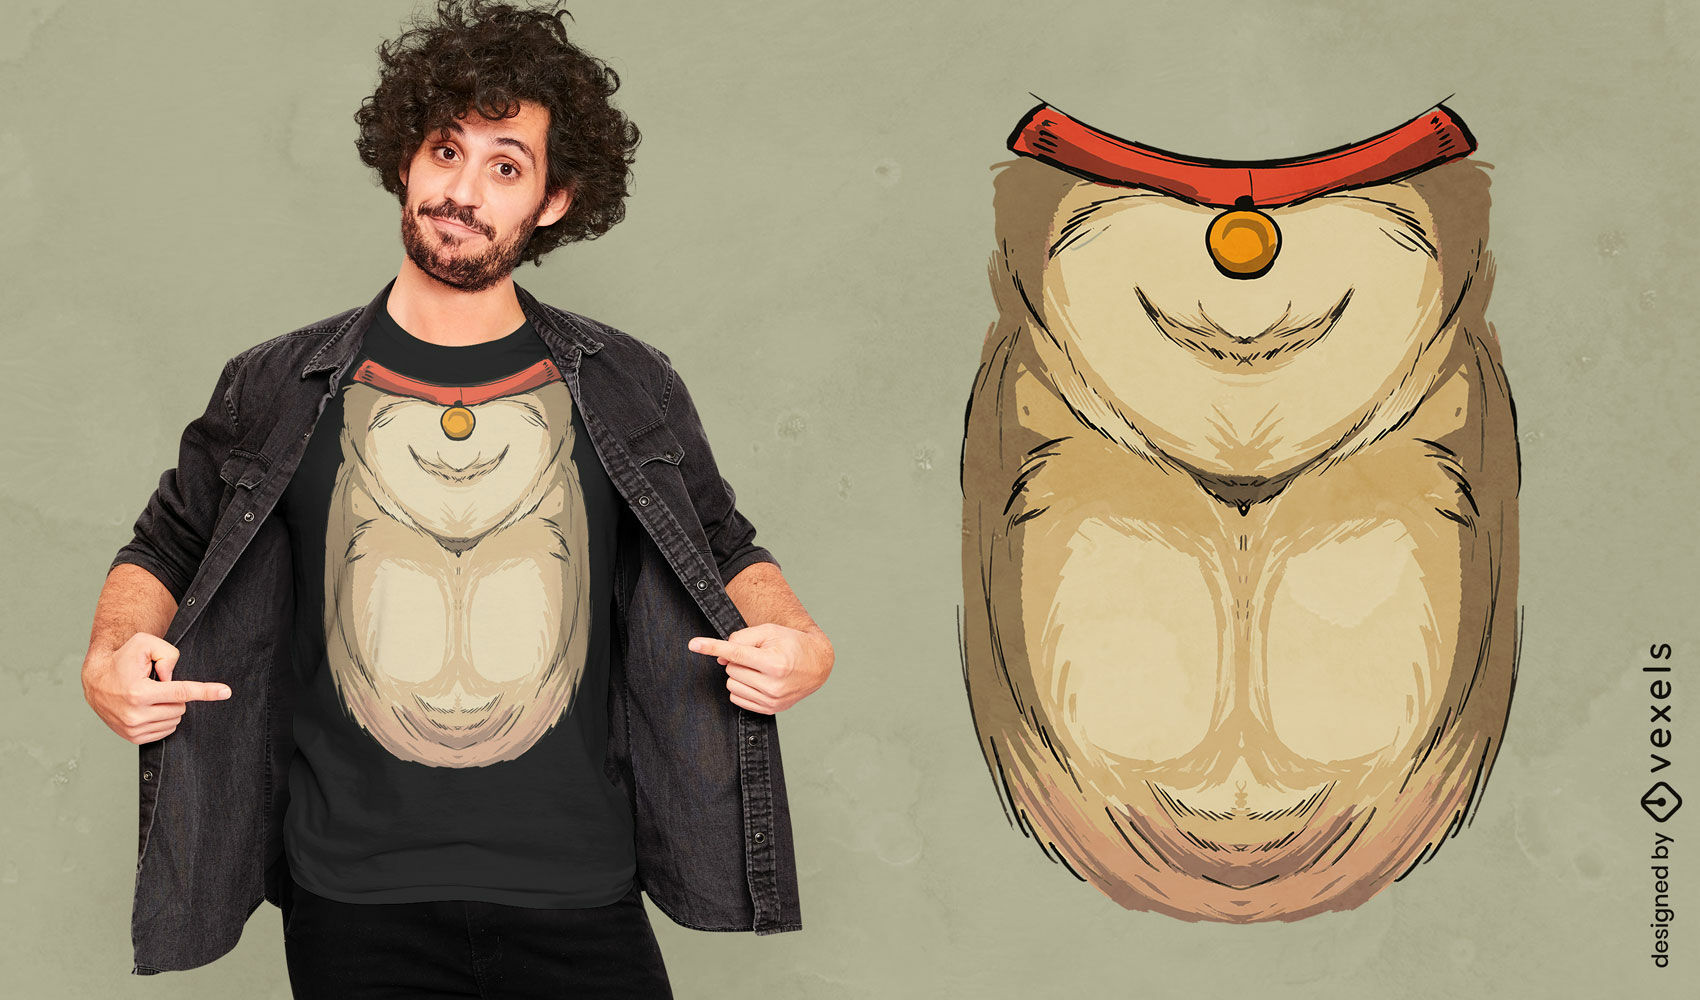 Pug chest costume t-shirt design